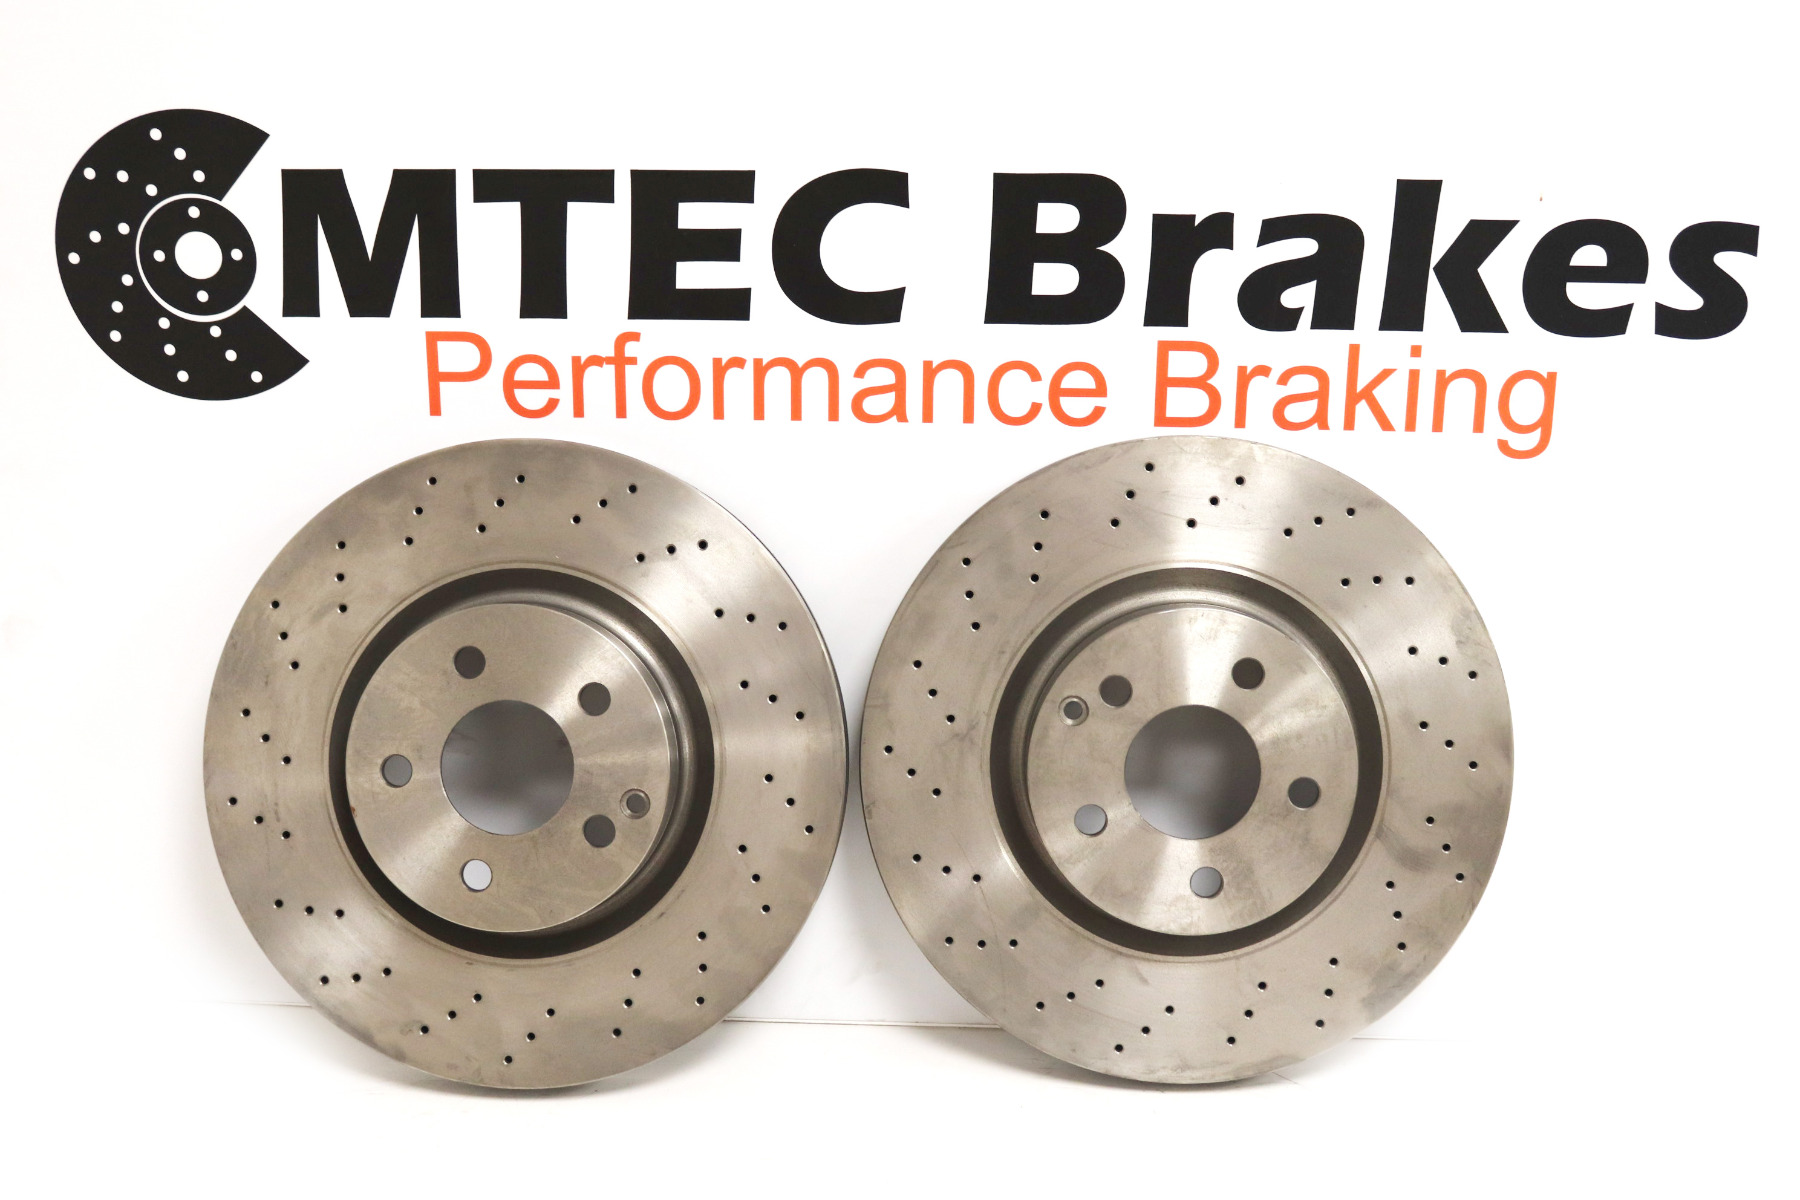 MTEC6151 Performance Brake Discs